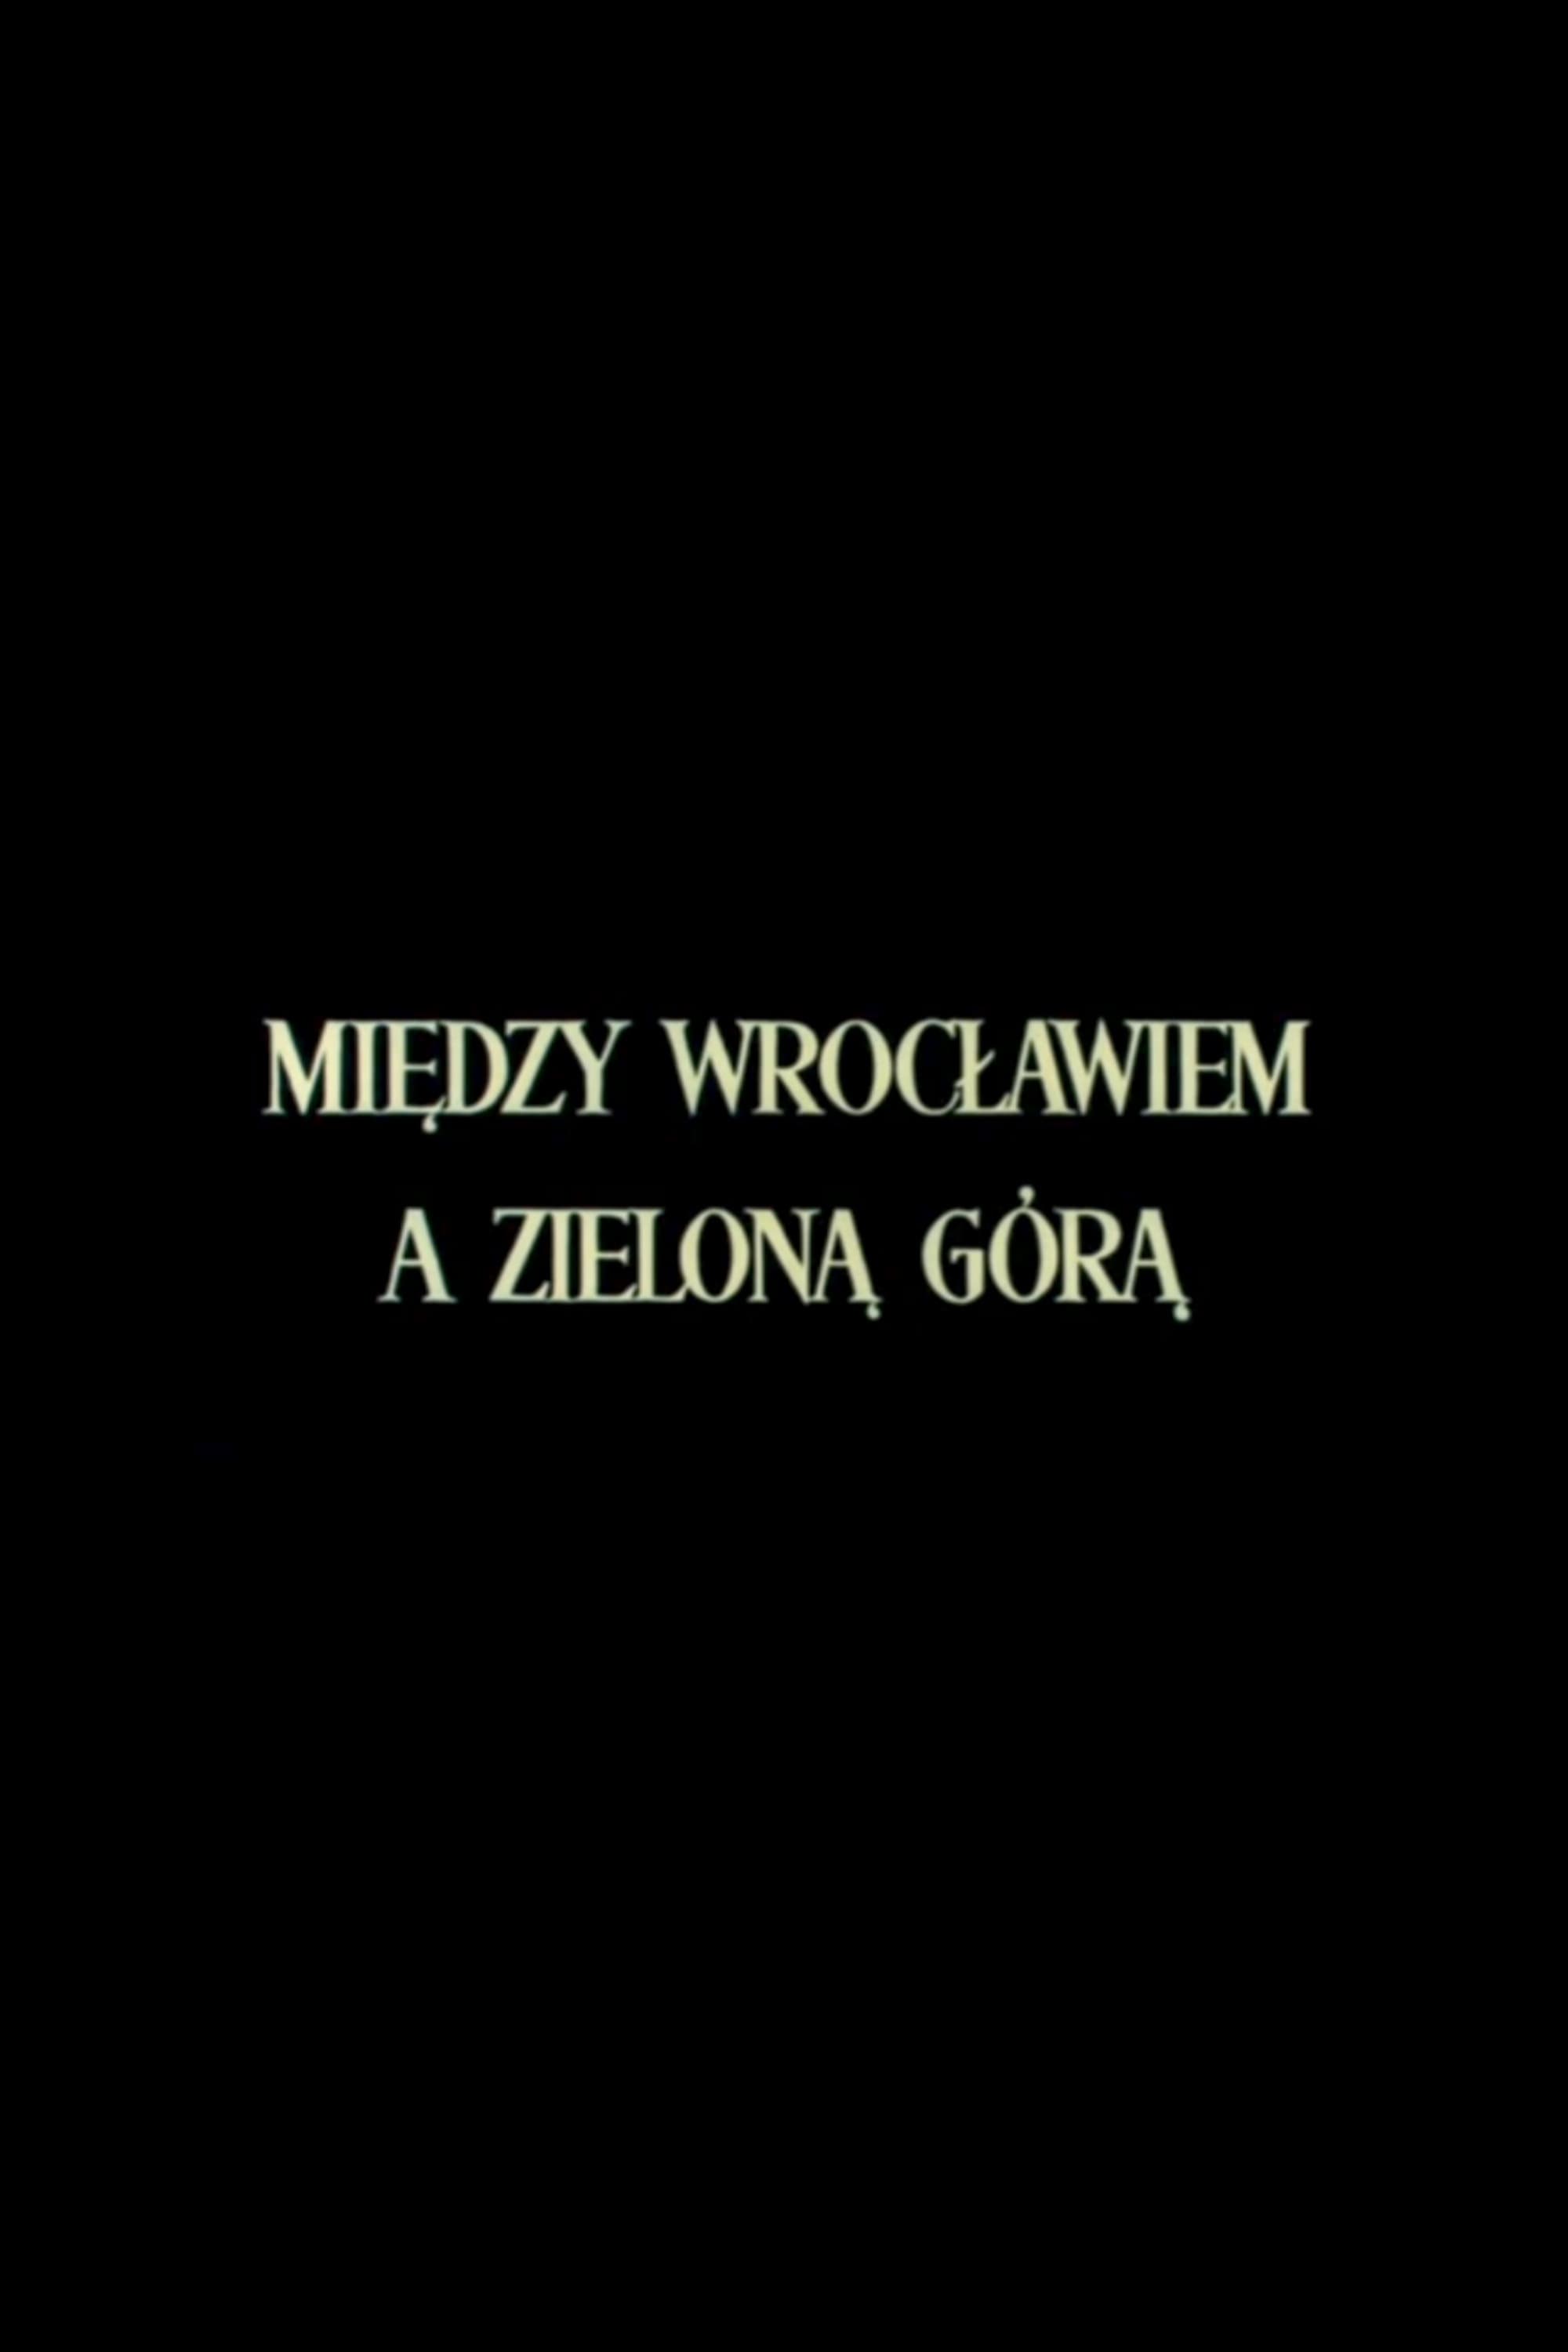 Between Wroclaw and Zielona Góra